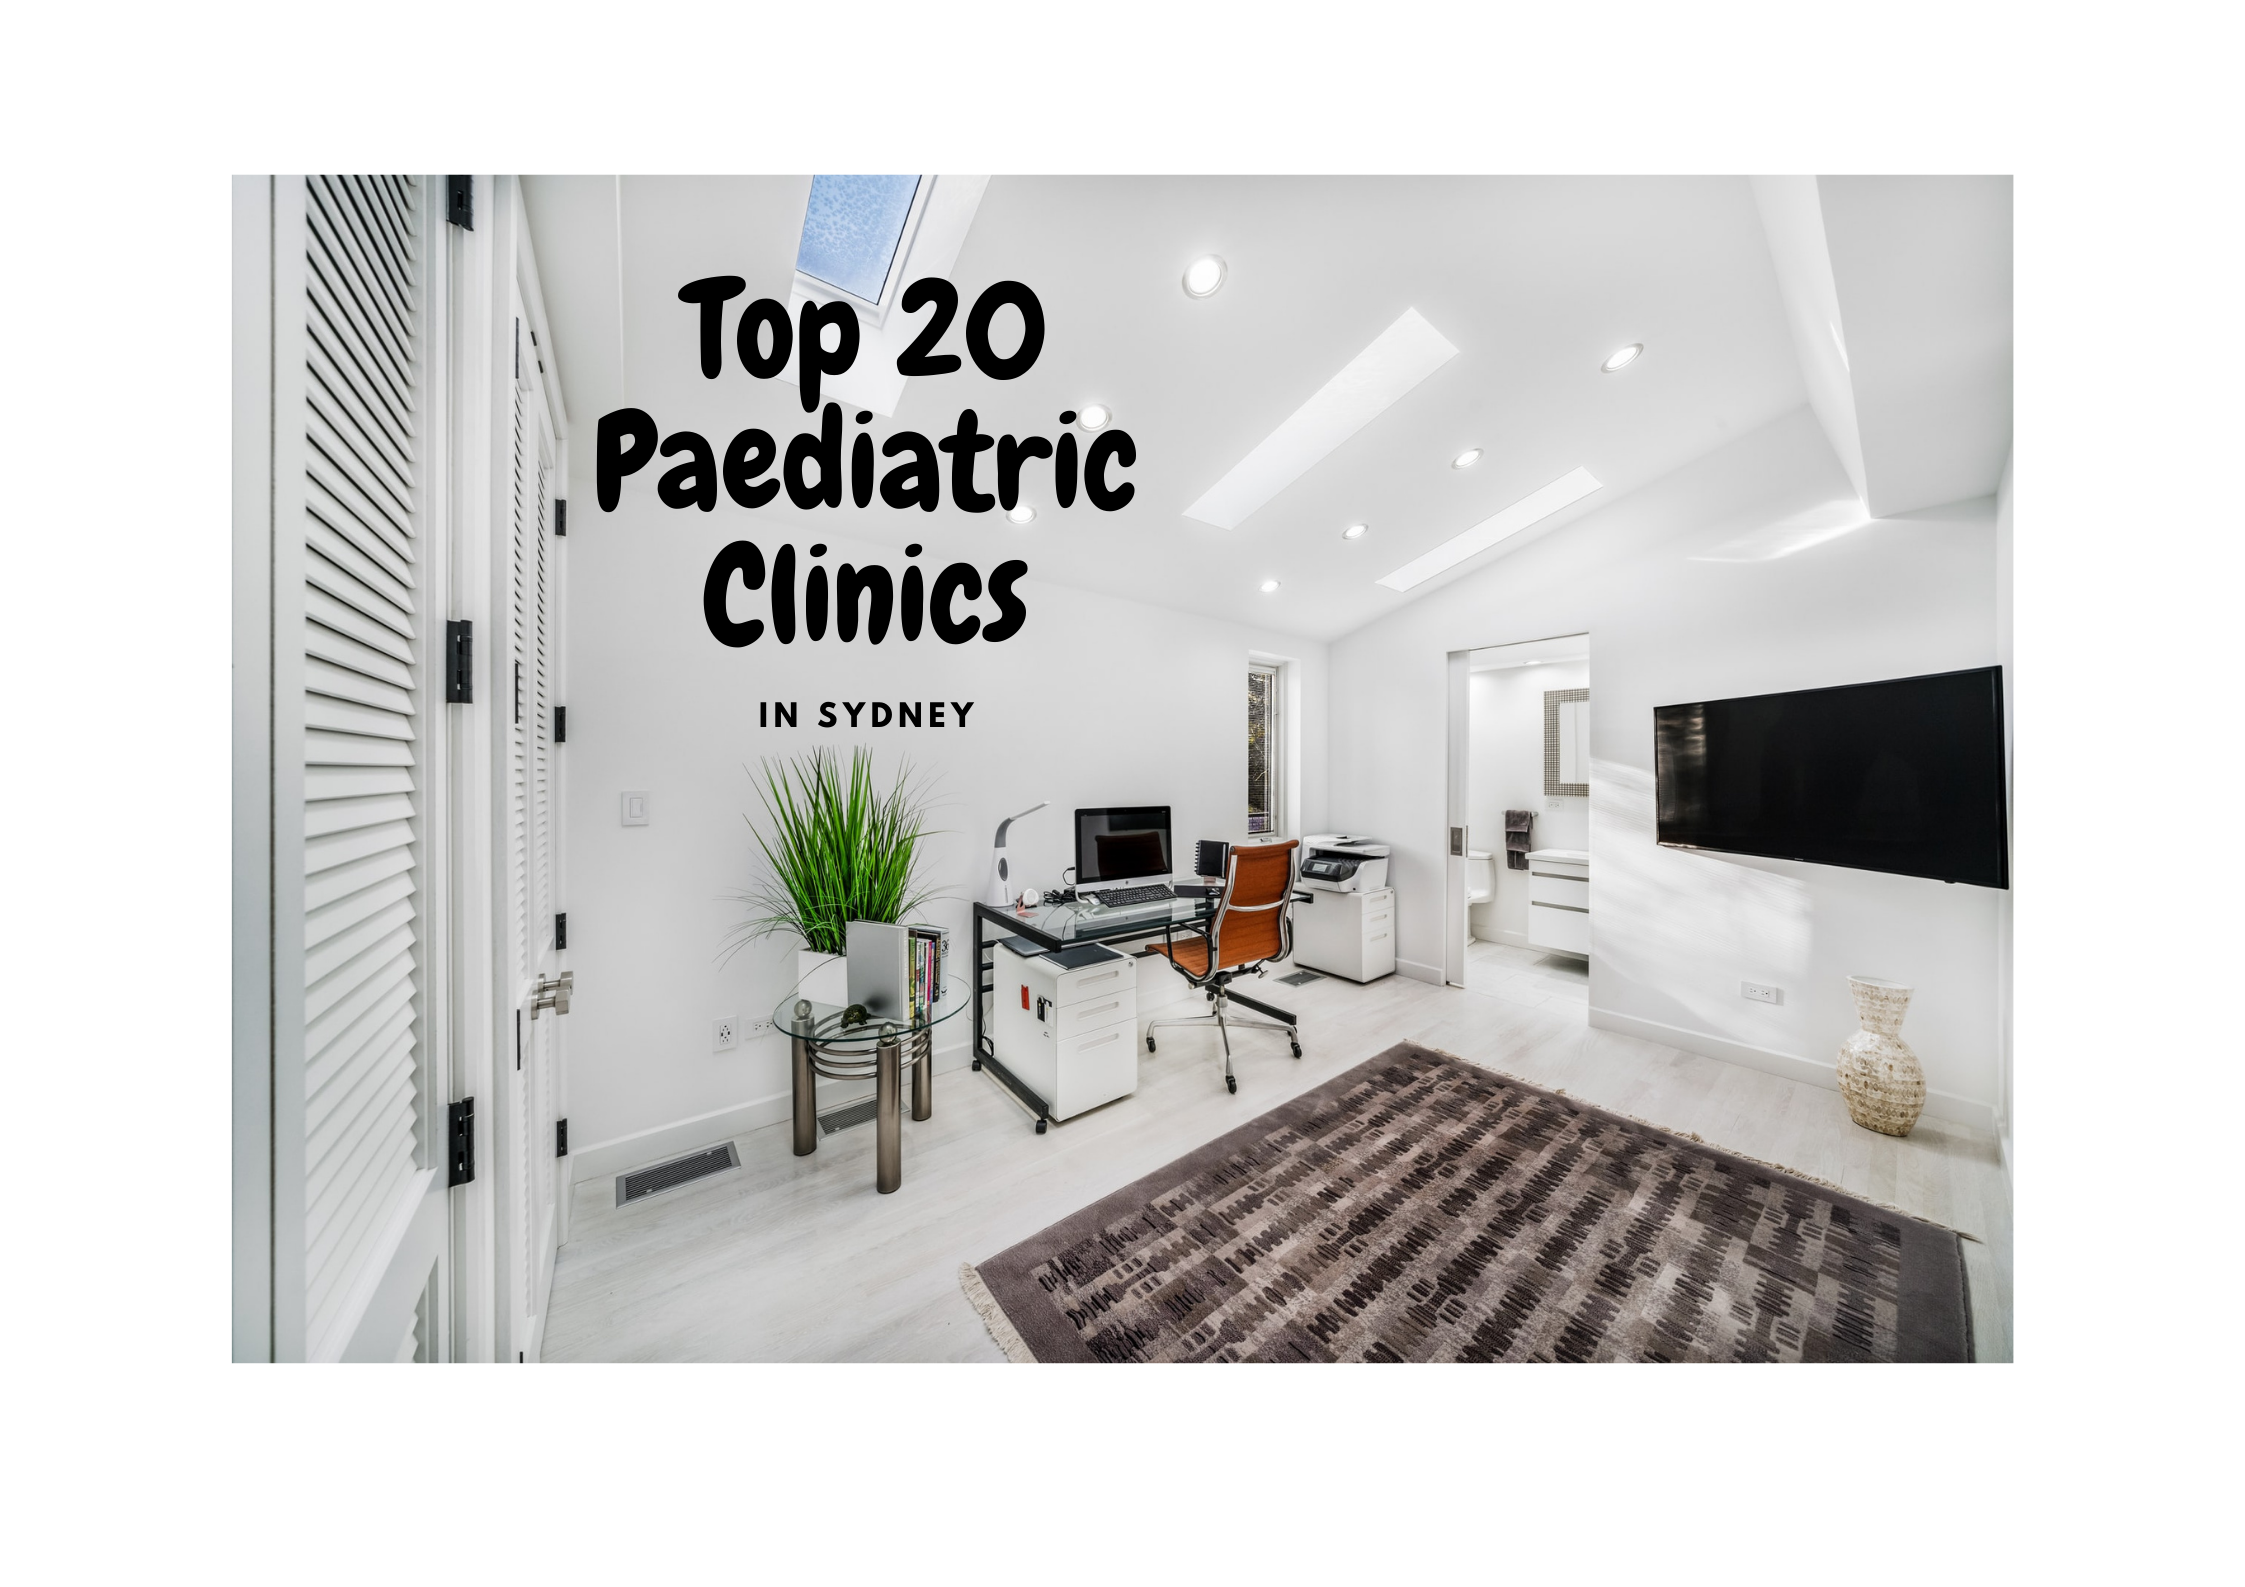 Top 20 pAEDIATRIC Clinics (1)